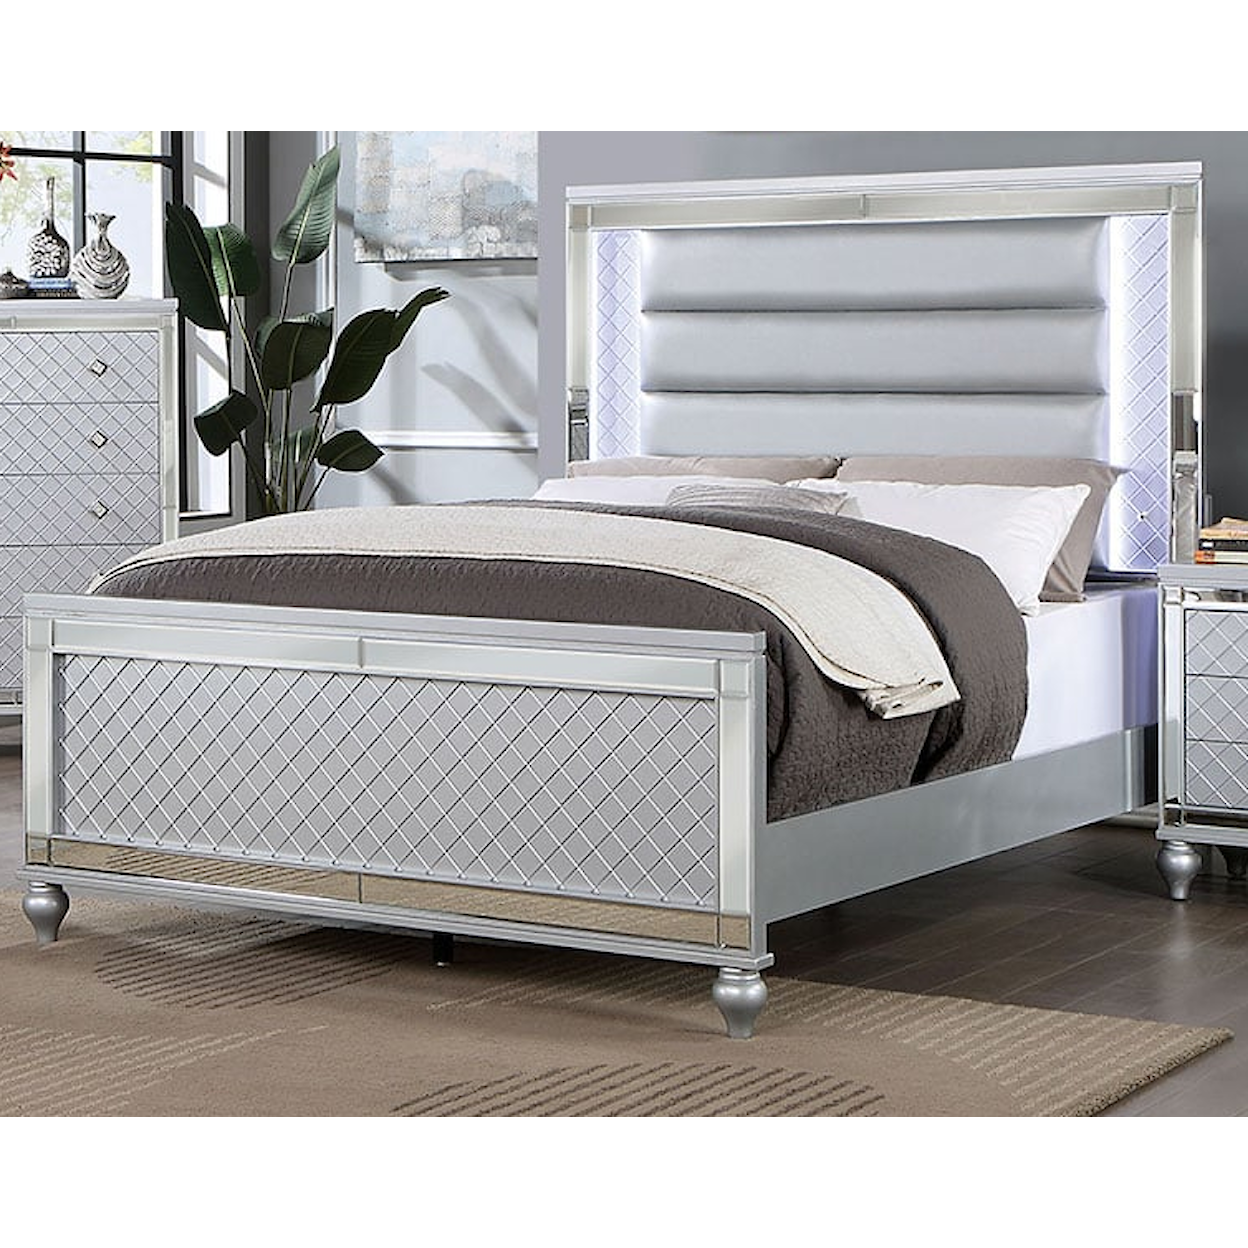 Furniture of America CALANDRIA Queen Bed with Built-In Lighting